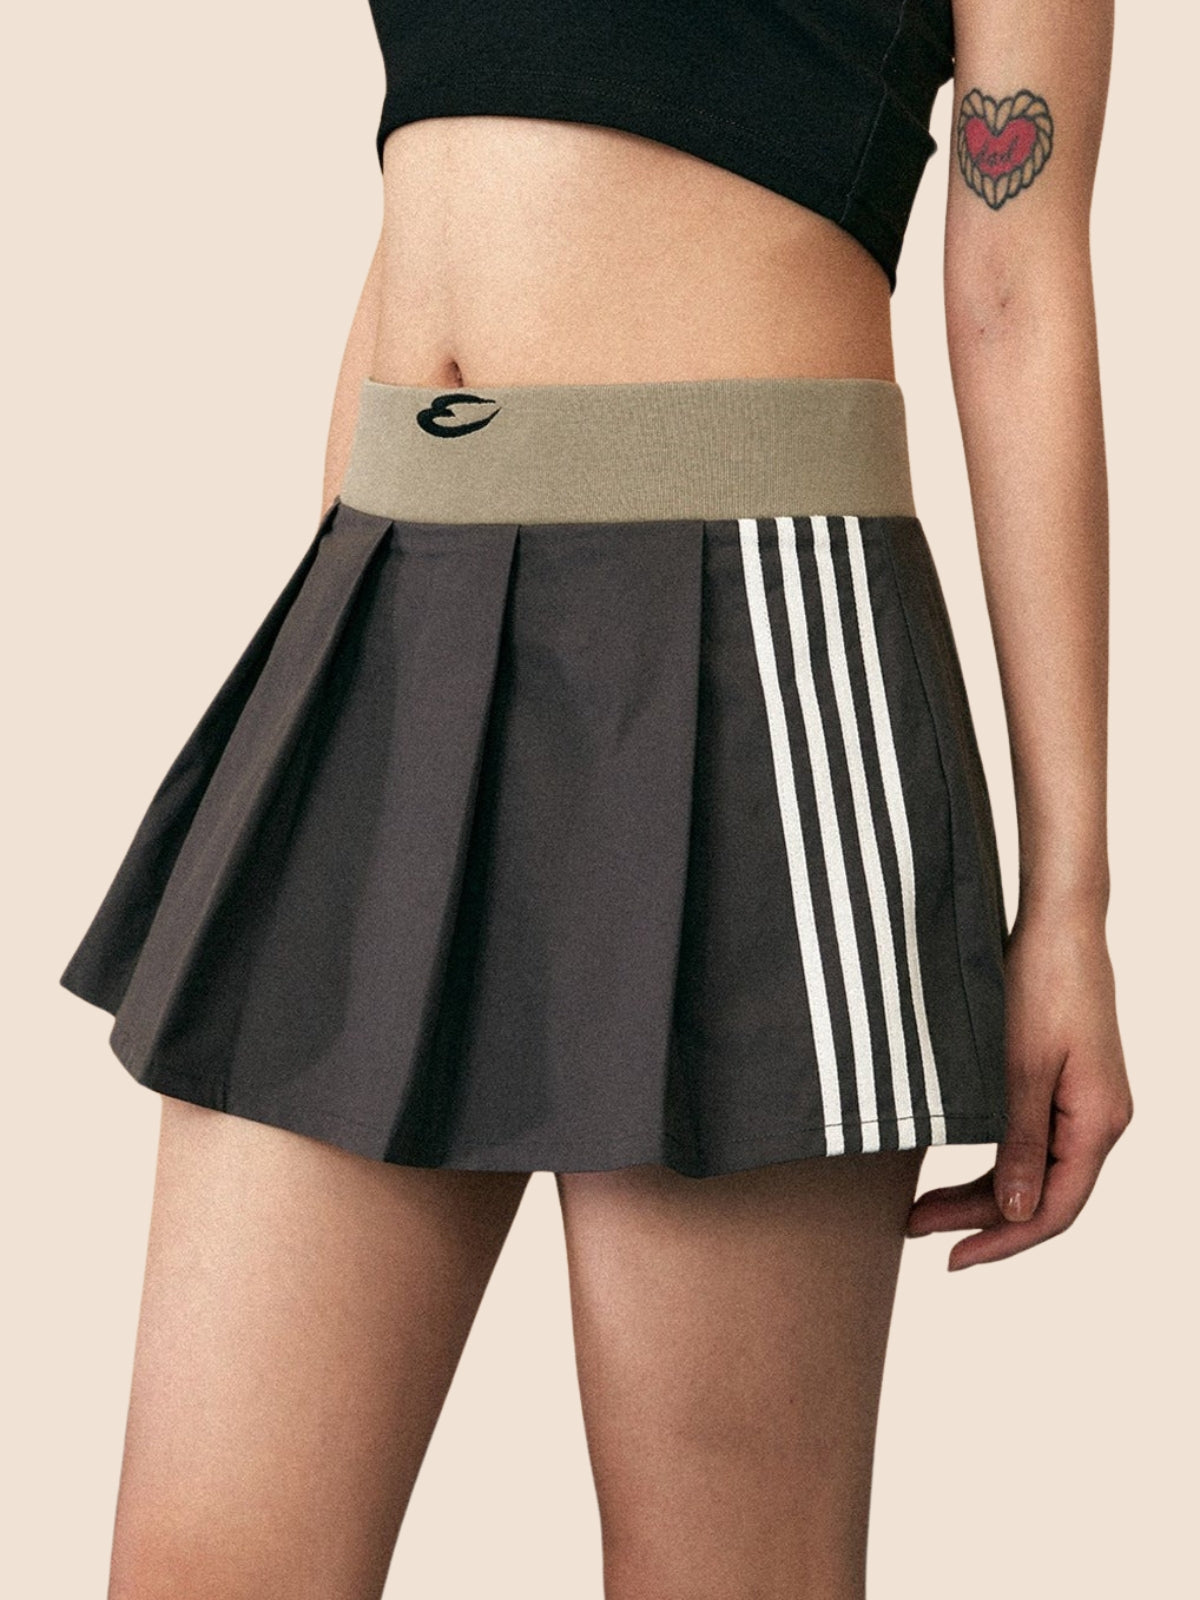 Vintage Striped A-Line Skirt